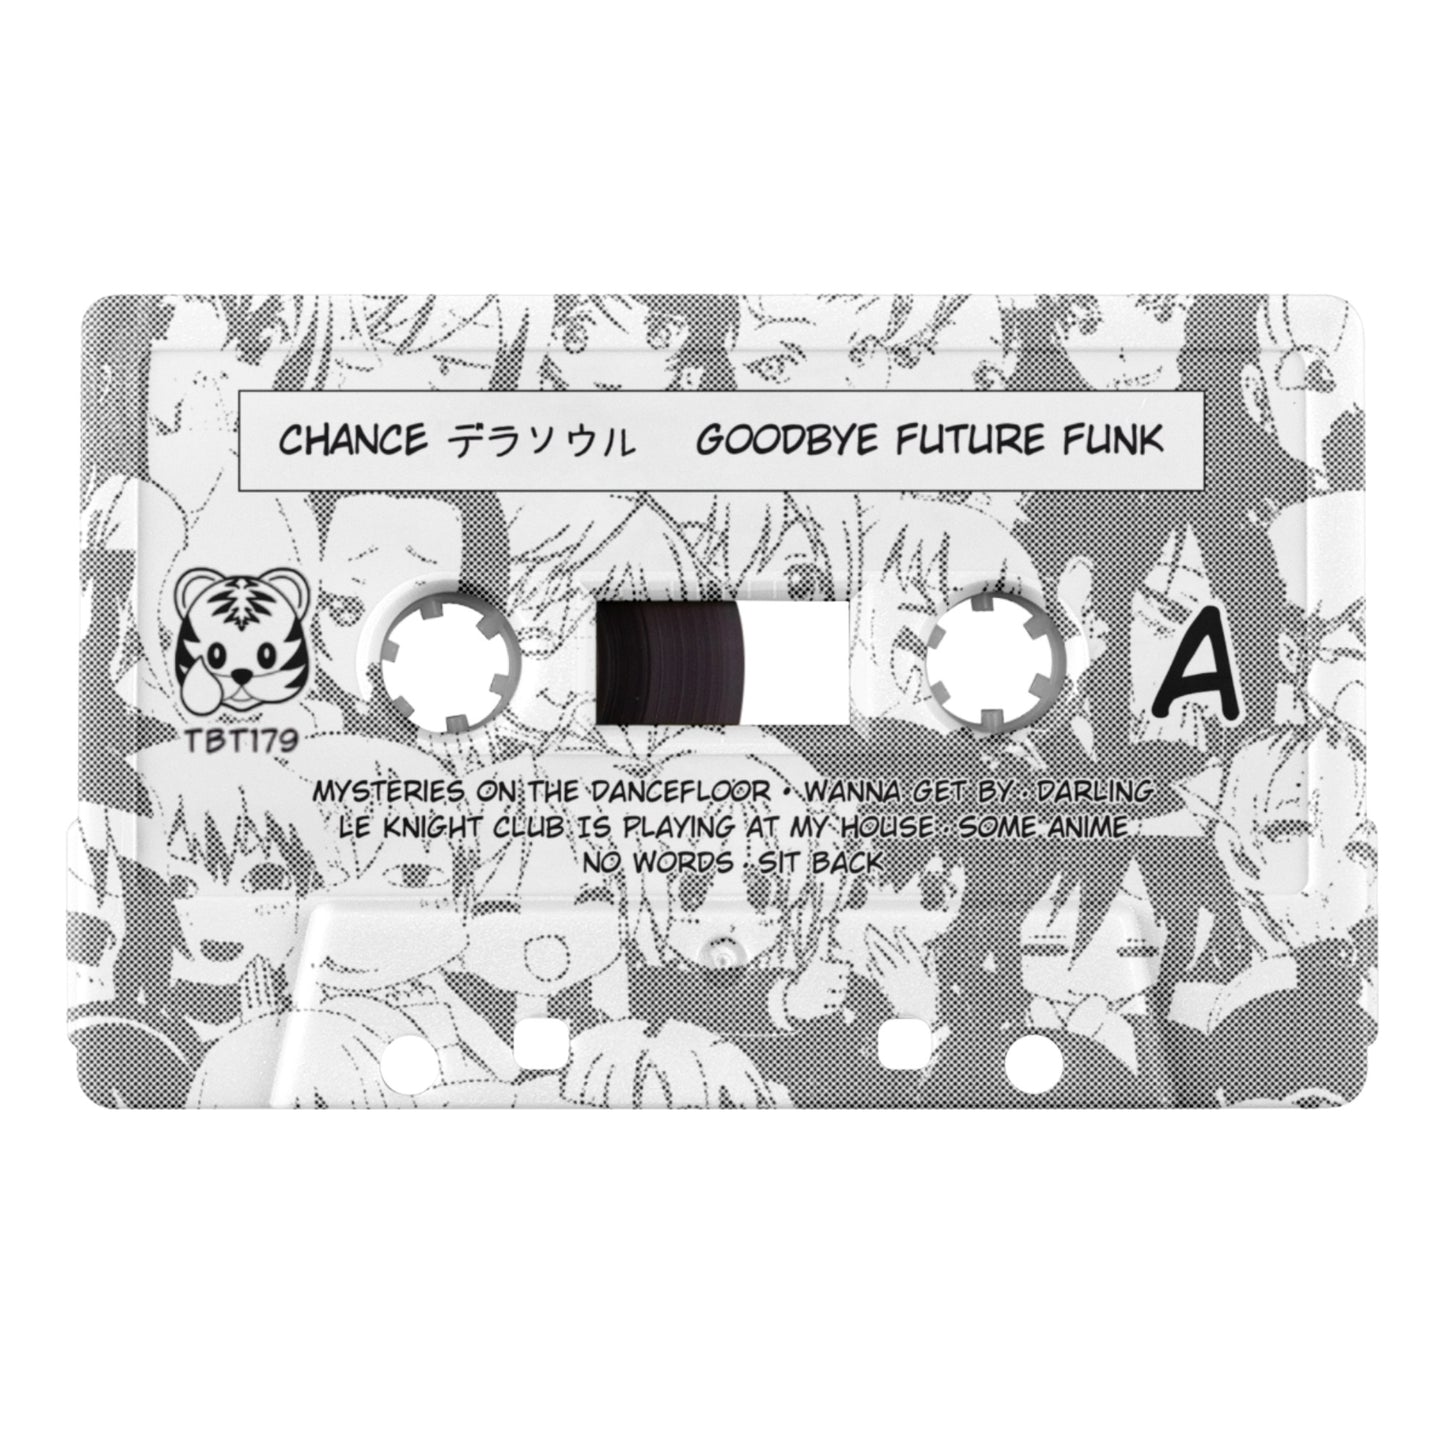 CHANCE デラソウル - "Goodbye Future Funk" Limited Edition Cassette Tape